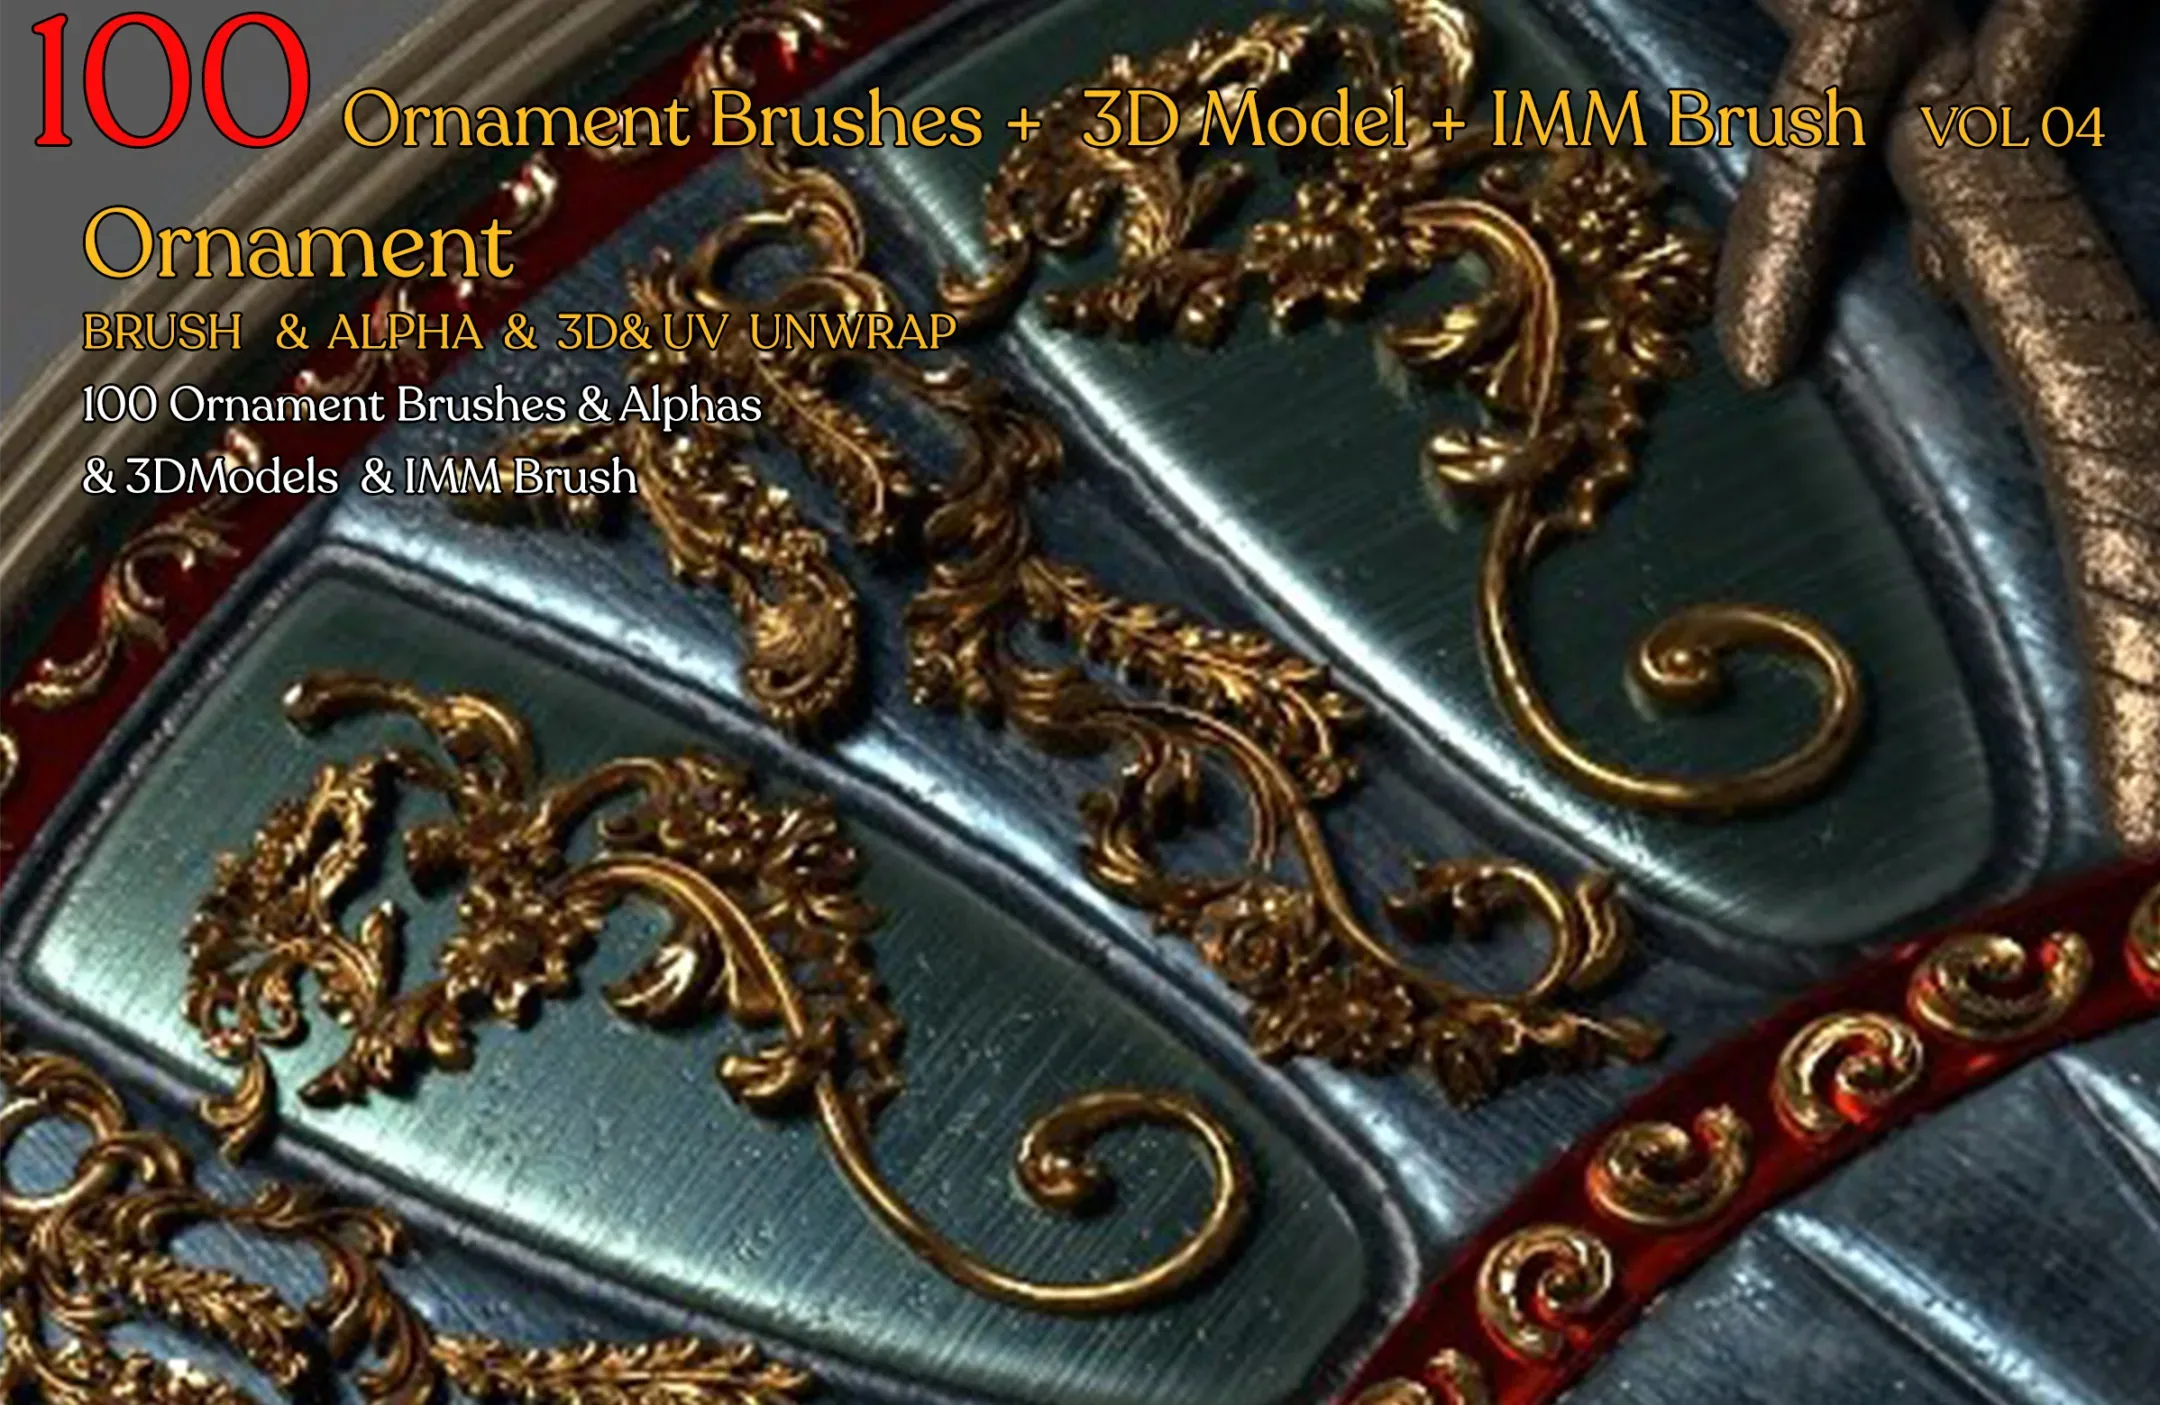 100 Ornament Brushes 3D Model IMM Brush Vol 04